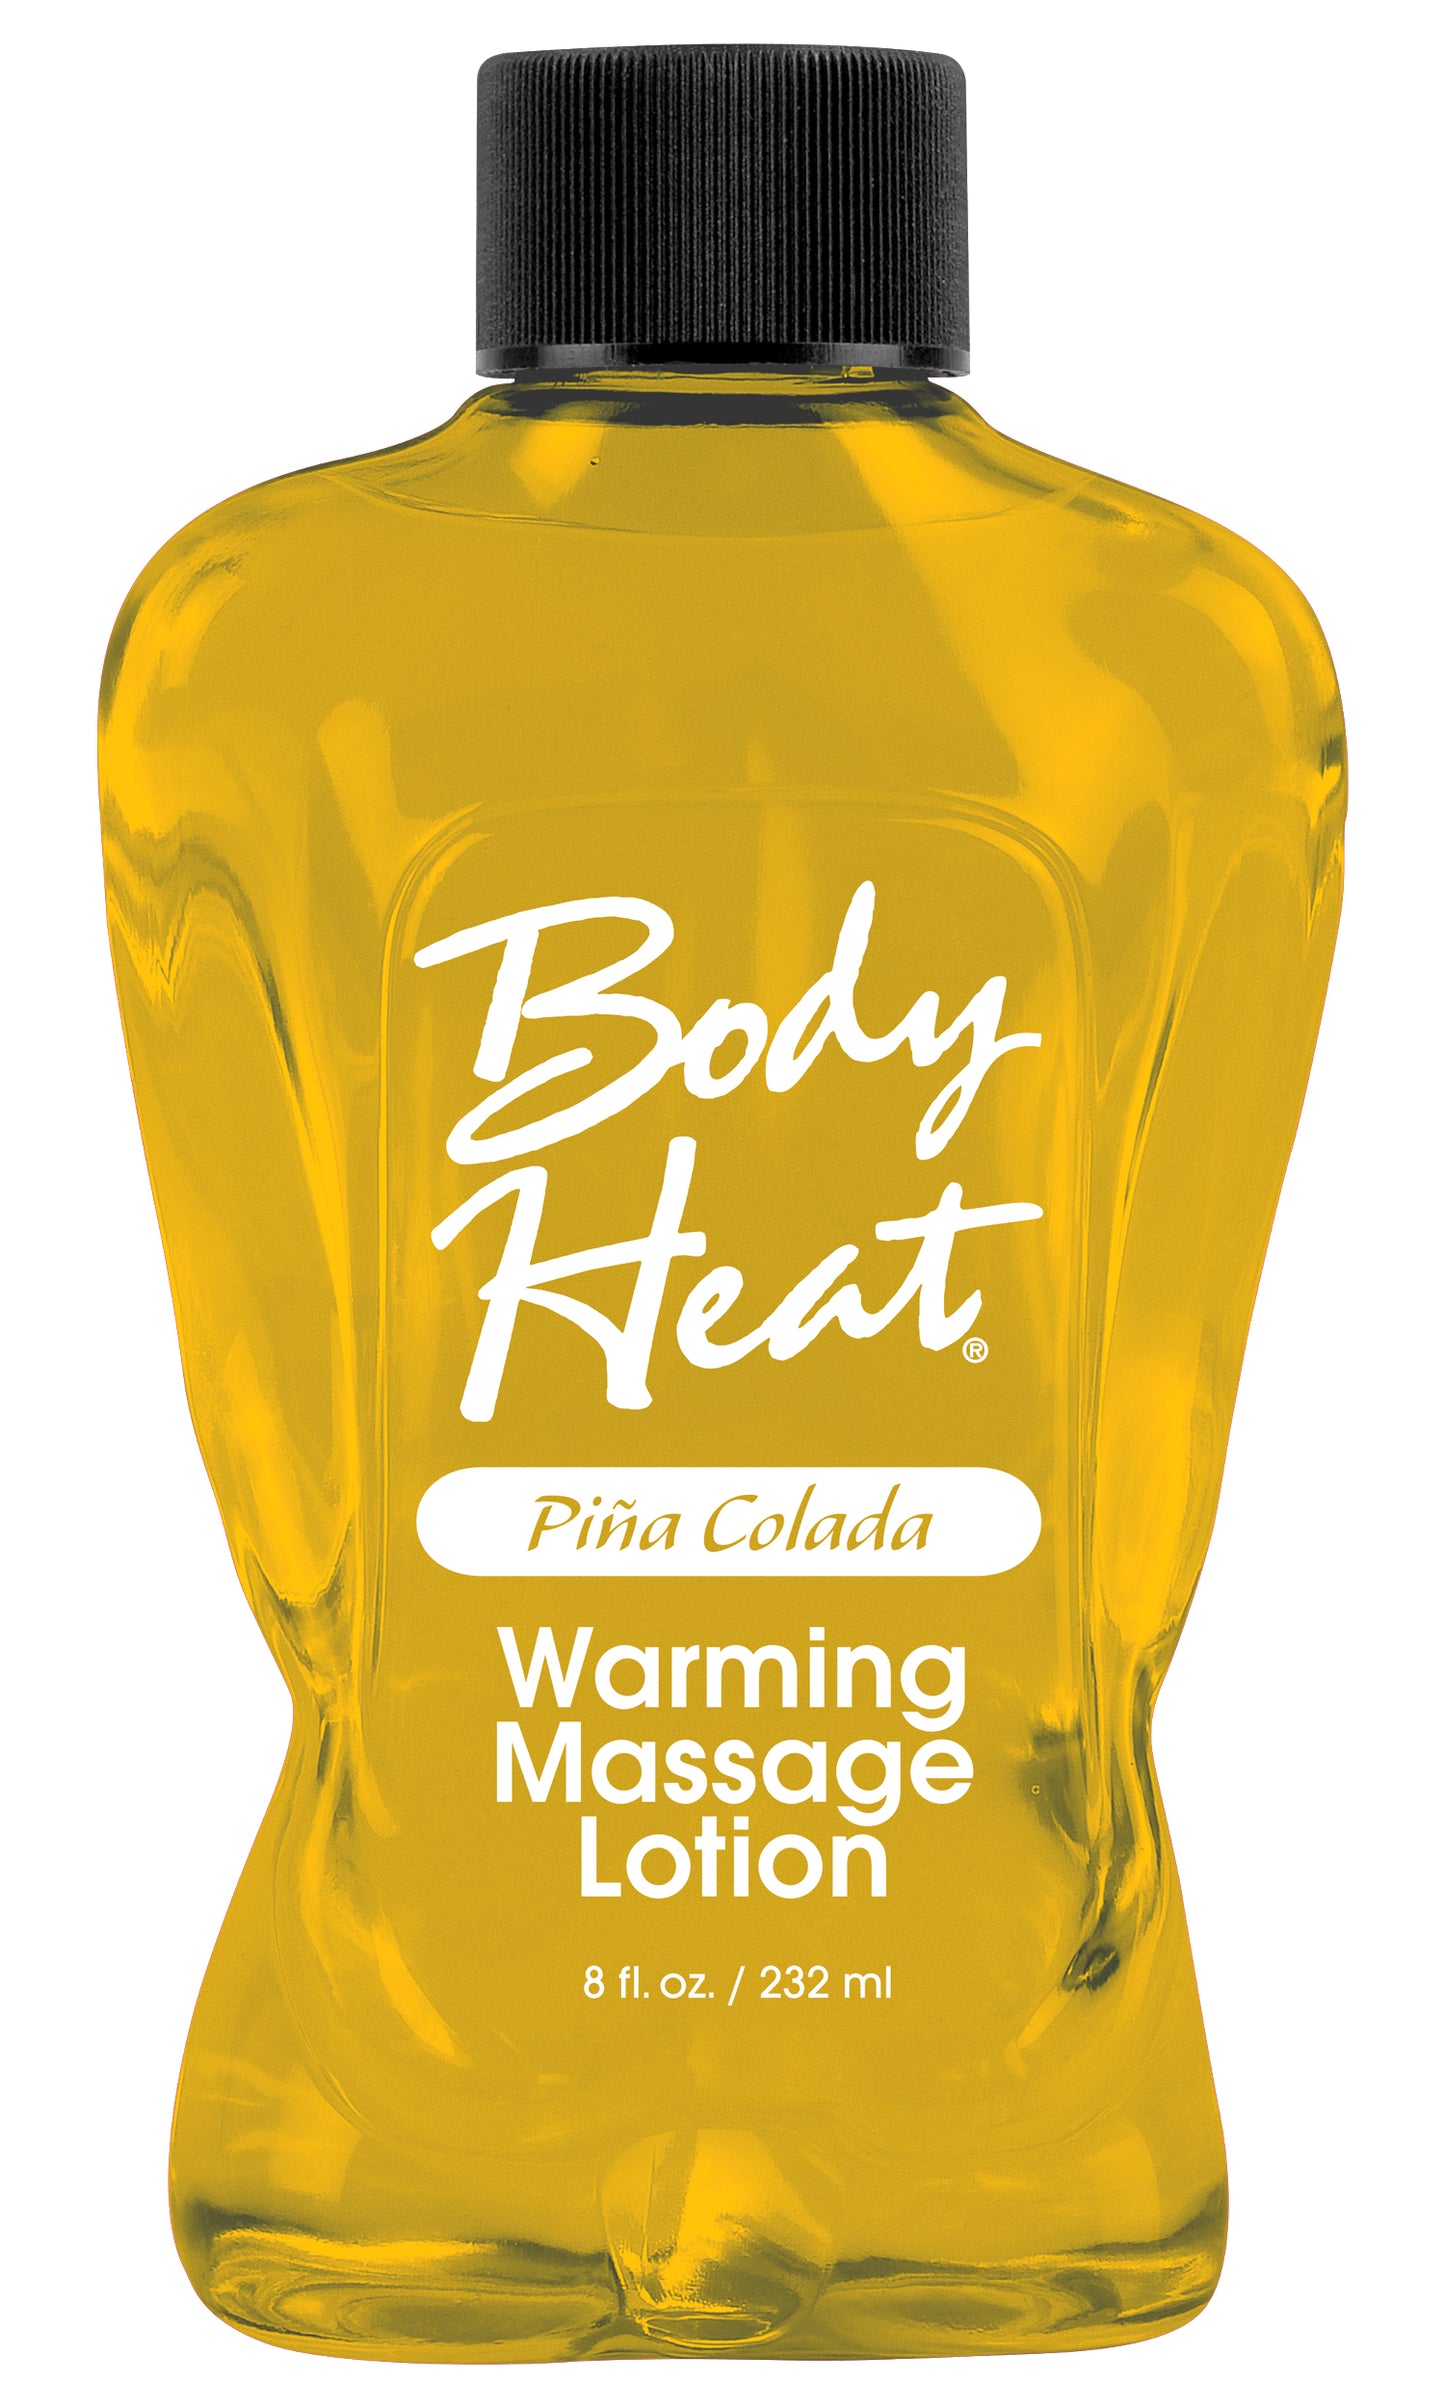 Body Heat Warming Massage Lotion Piña Colada